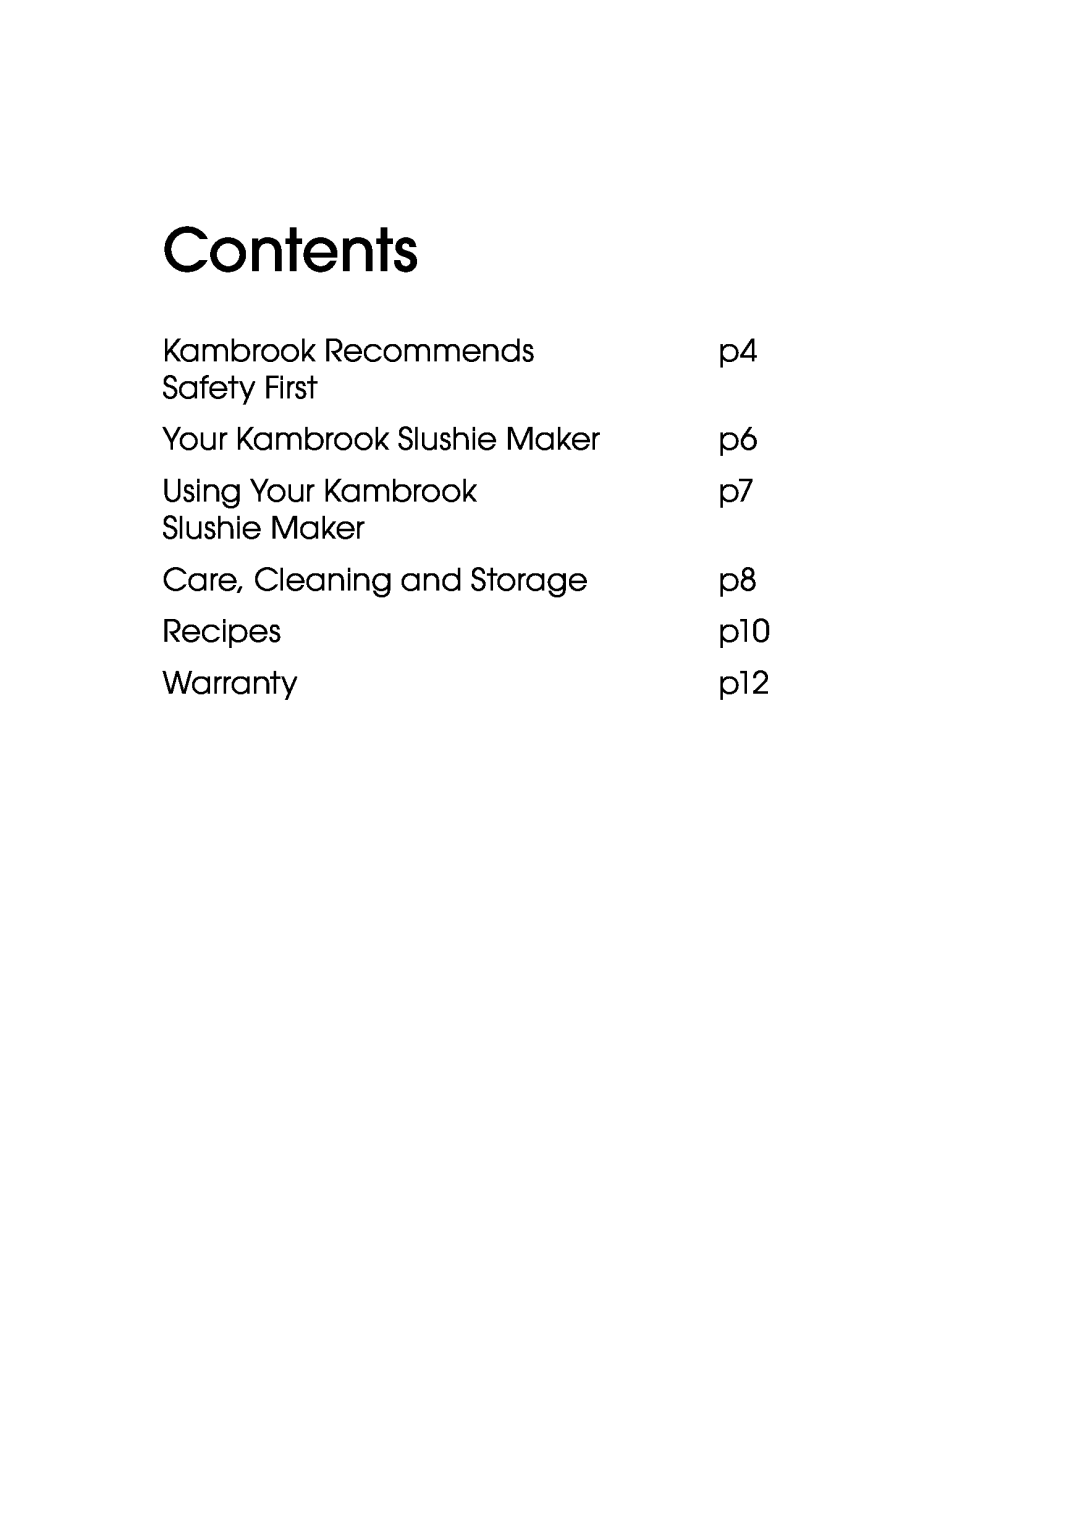 Kambrook KIS20 manual Contents 